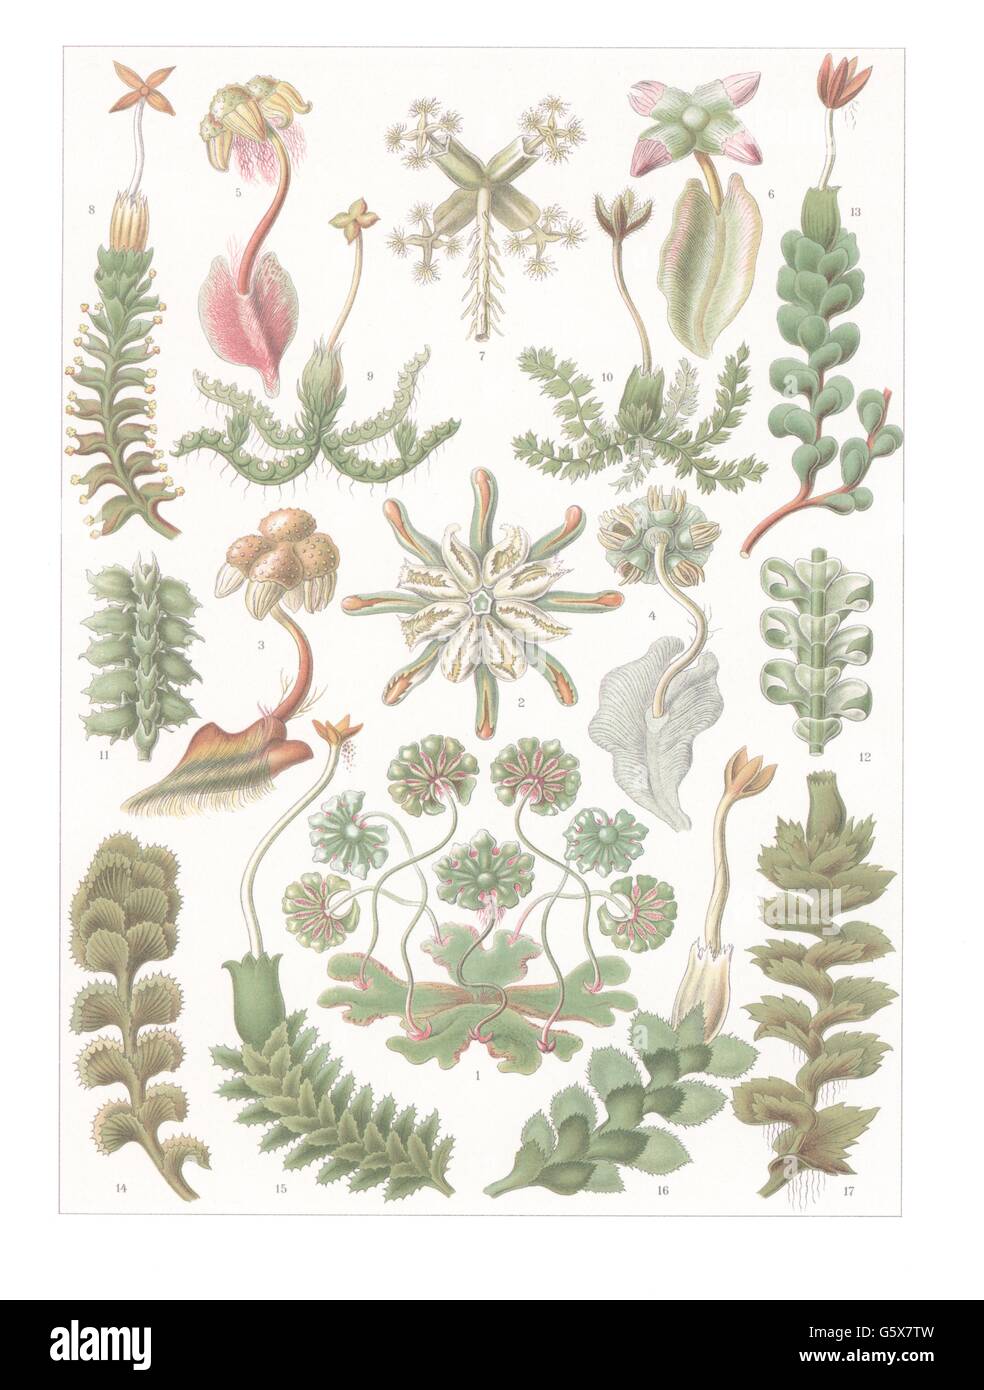 botanik, Moose, Lebermoose, Farblithographie, aus: Ernst Haeckel, 'Kunstformen der Natur', Leipzig - Wien, 1899 - 1904, Additional-Rights-Clearences-not available Stockfoto